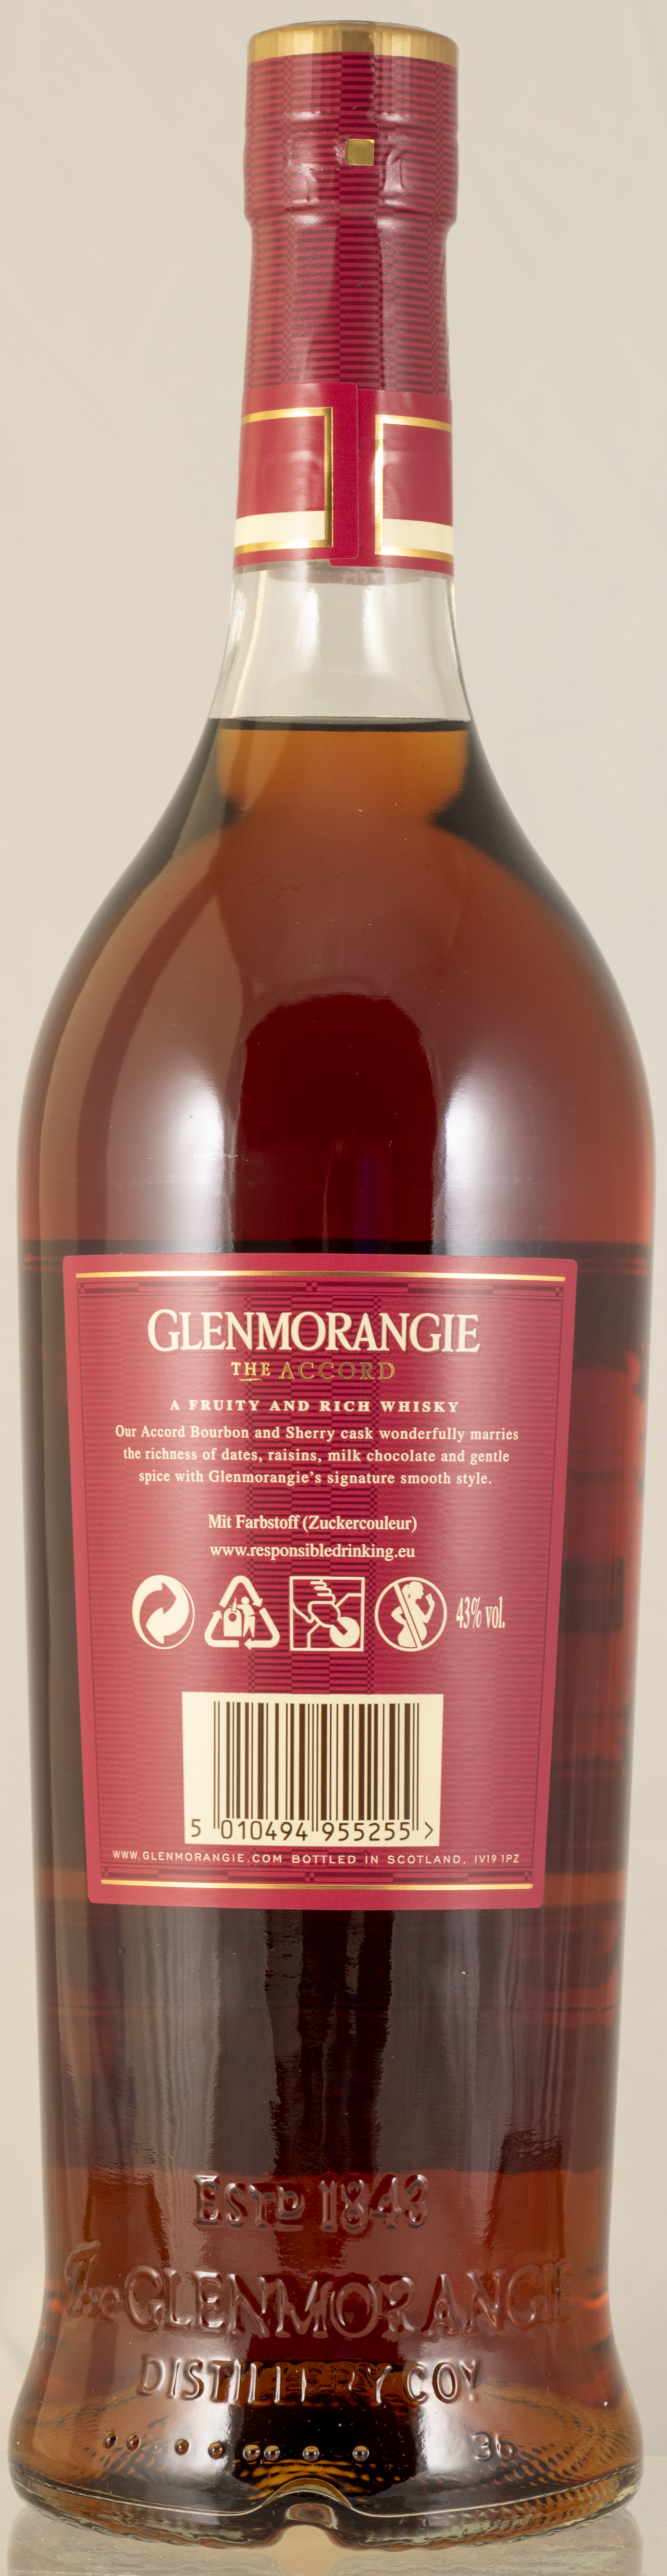 Billede: PHC_7060 - Glenmorangie The Accord 12 - bottle back.jpg